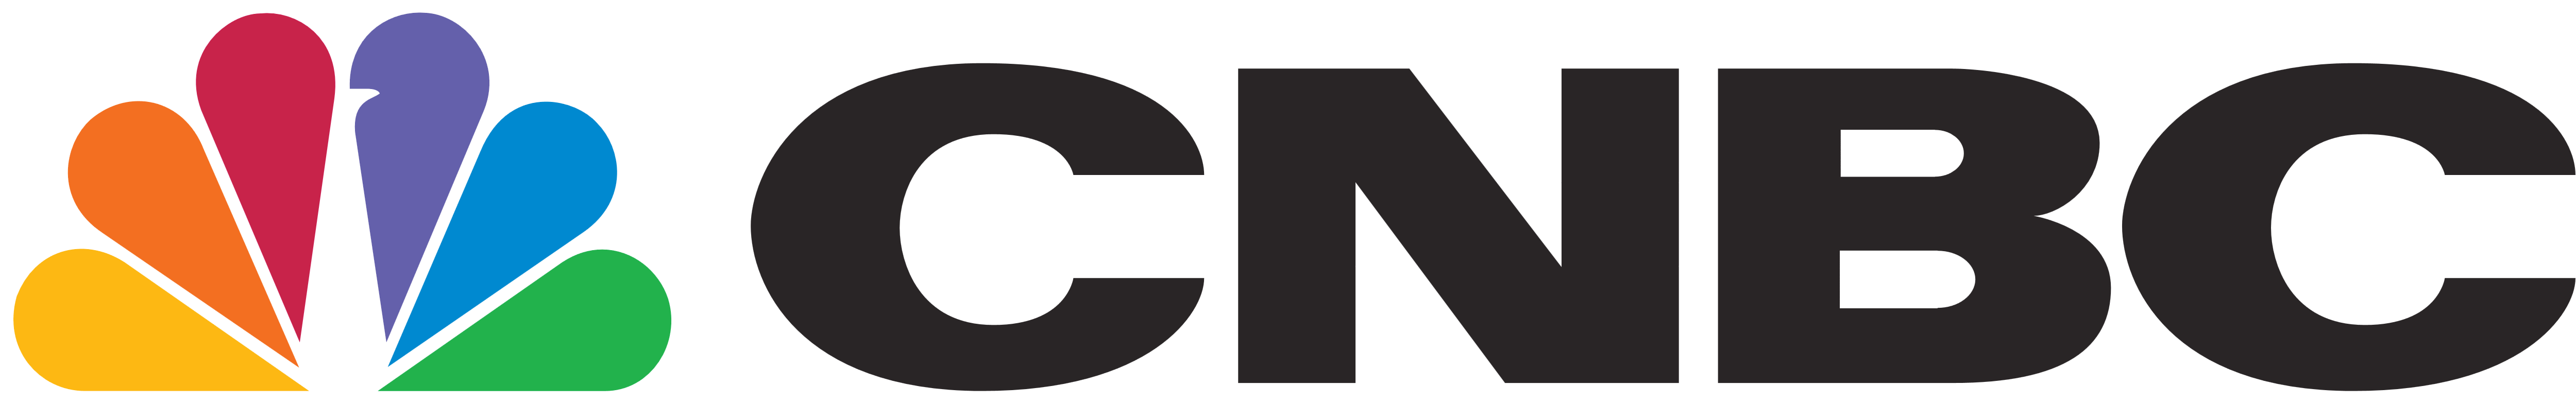 CNBC_logo_horizontal